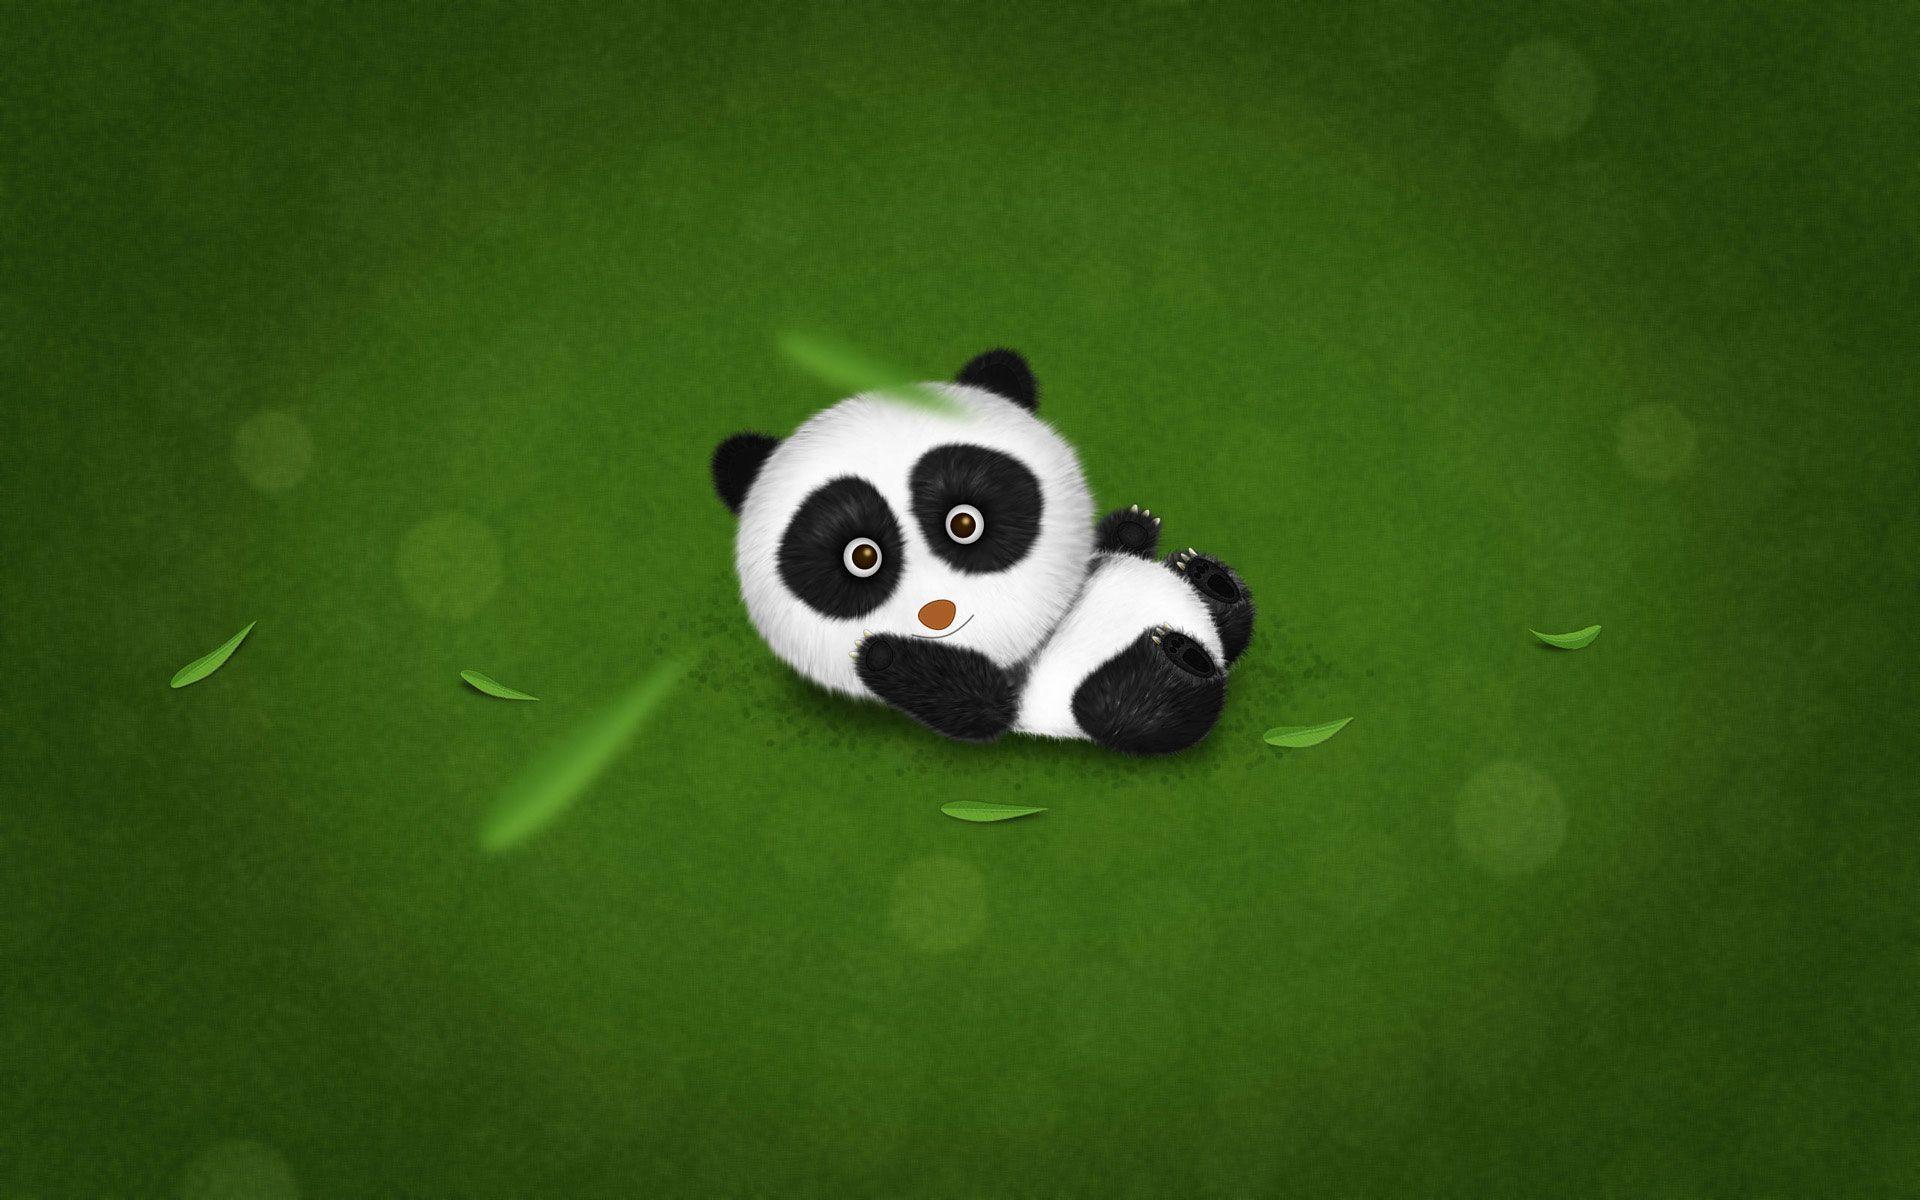 Cute Panda Cartoon Wallpaper Hd Images amp Pictures   Becuo 1920x1200